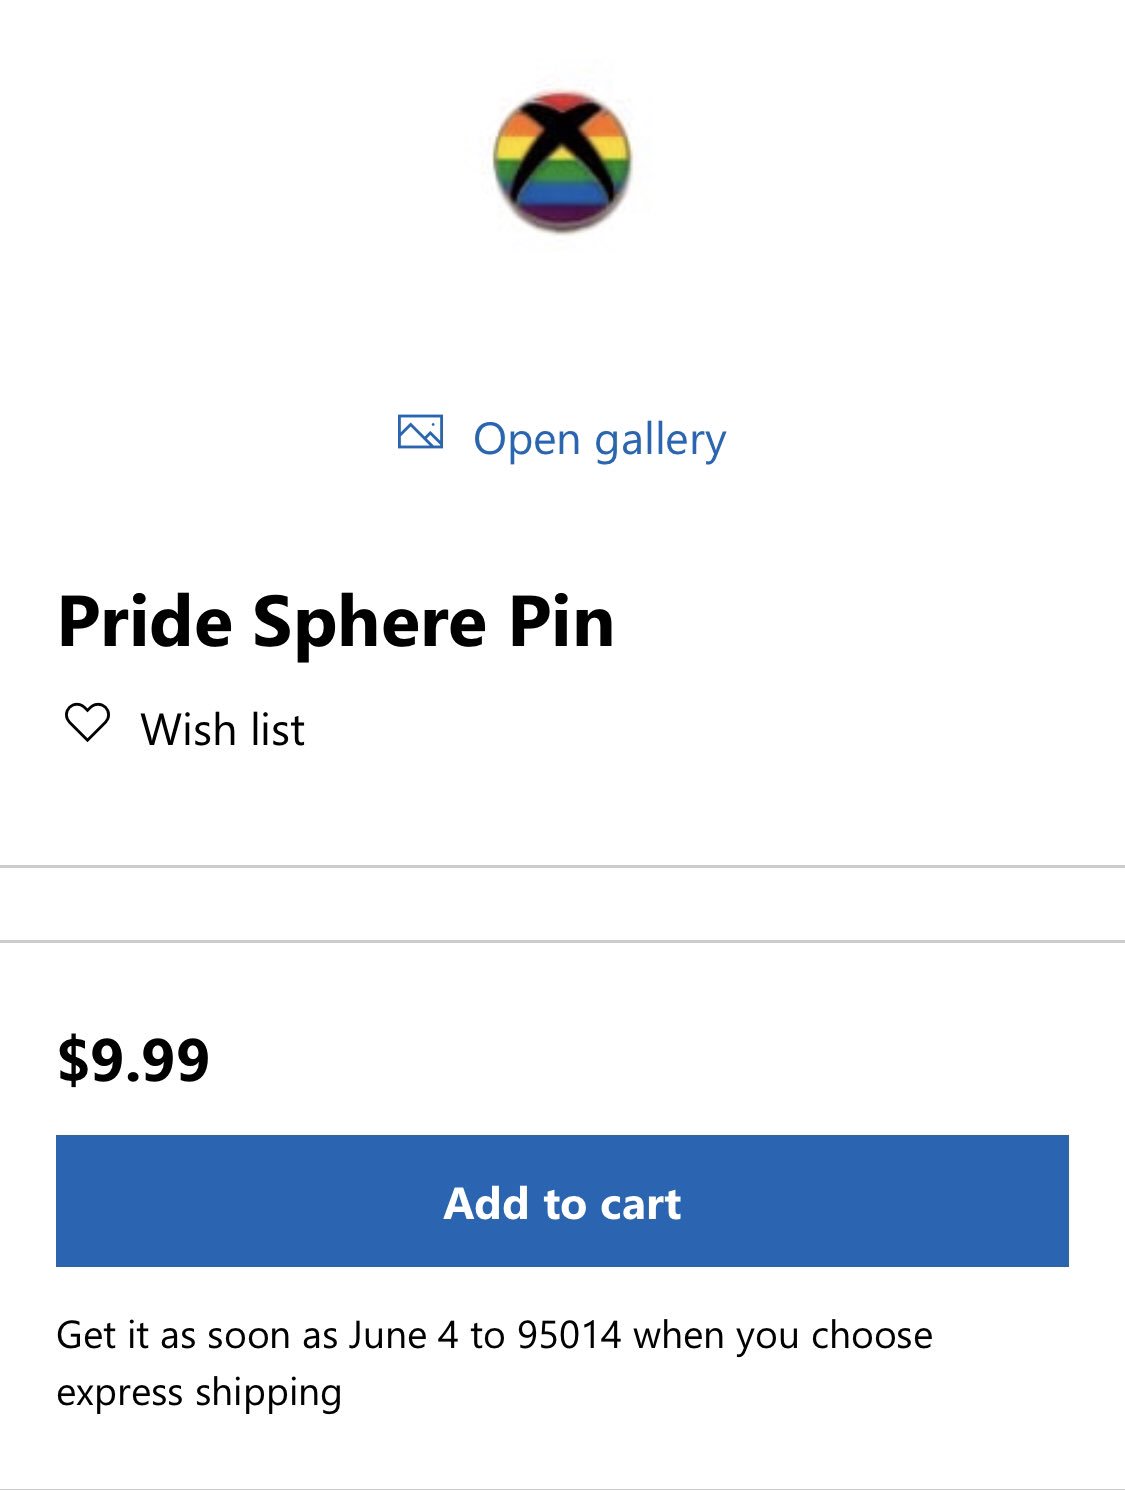 Pin on Wish list